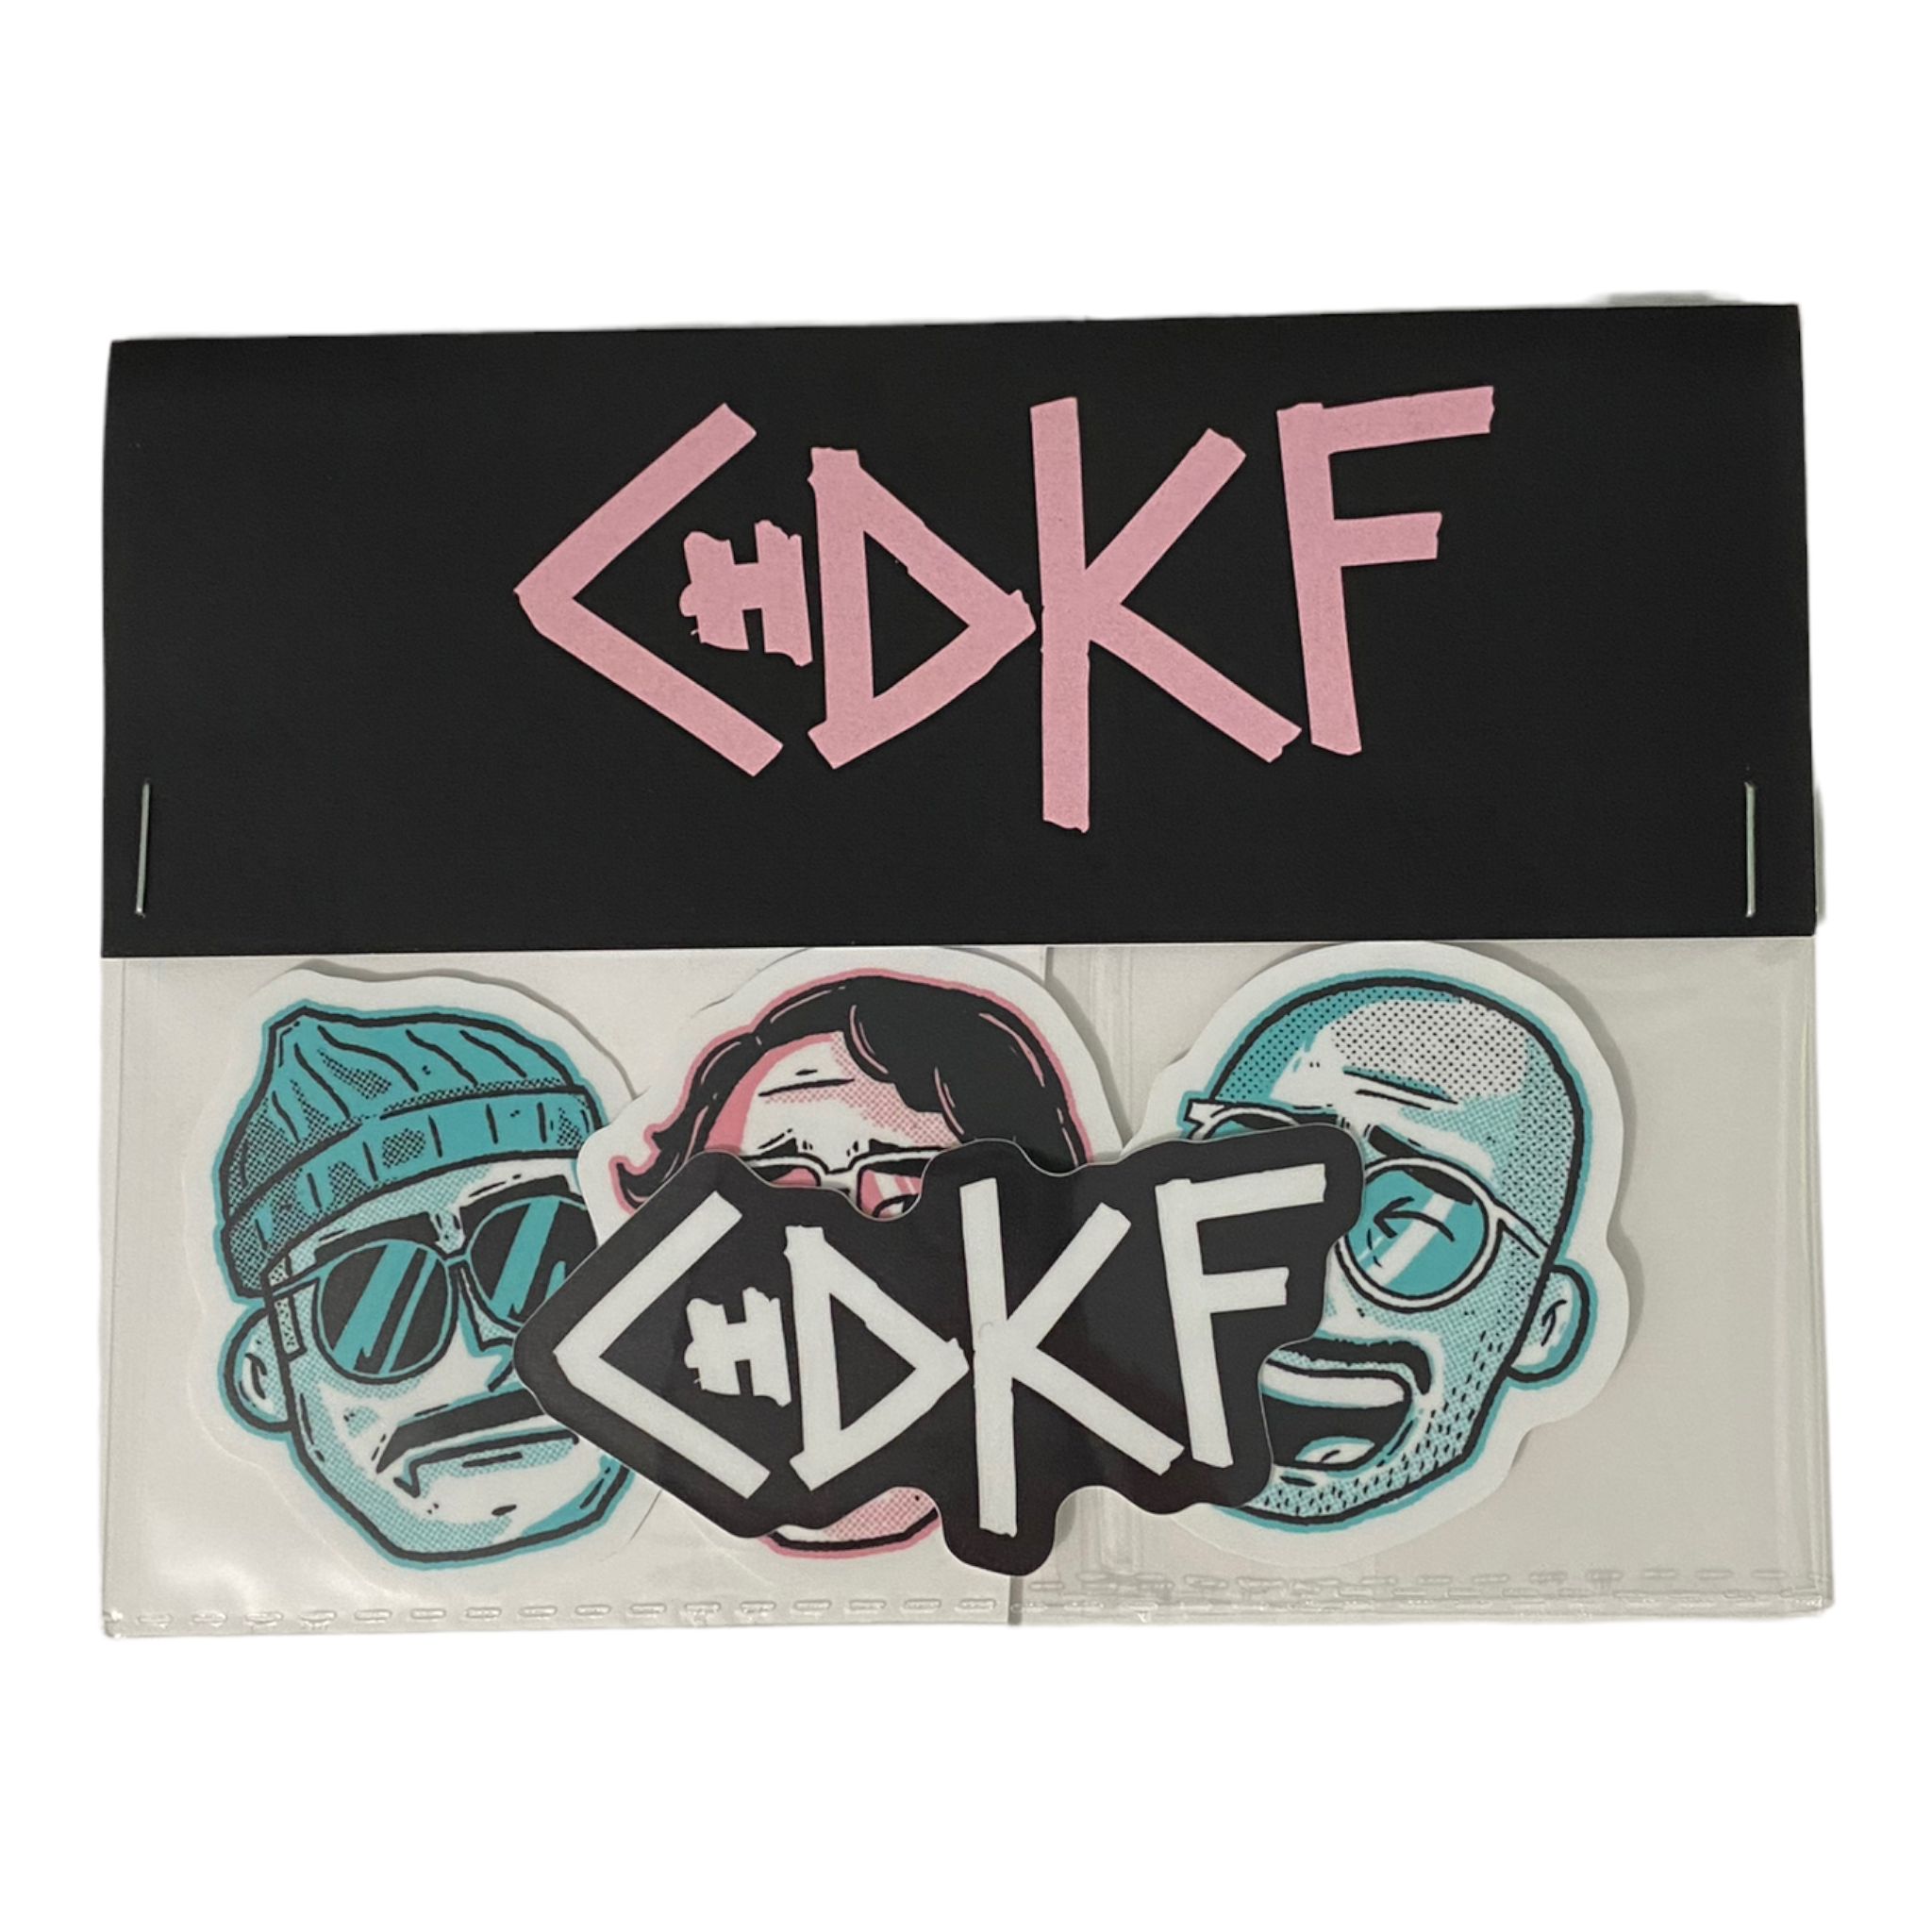 Stickers - CHDKF (4)